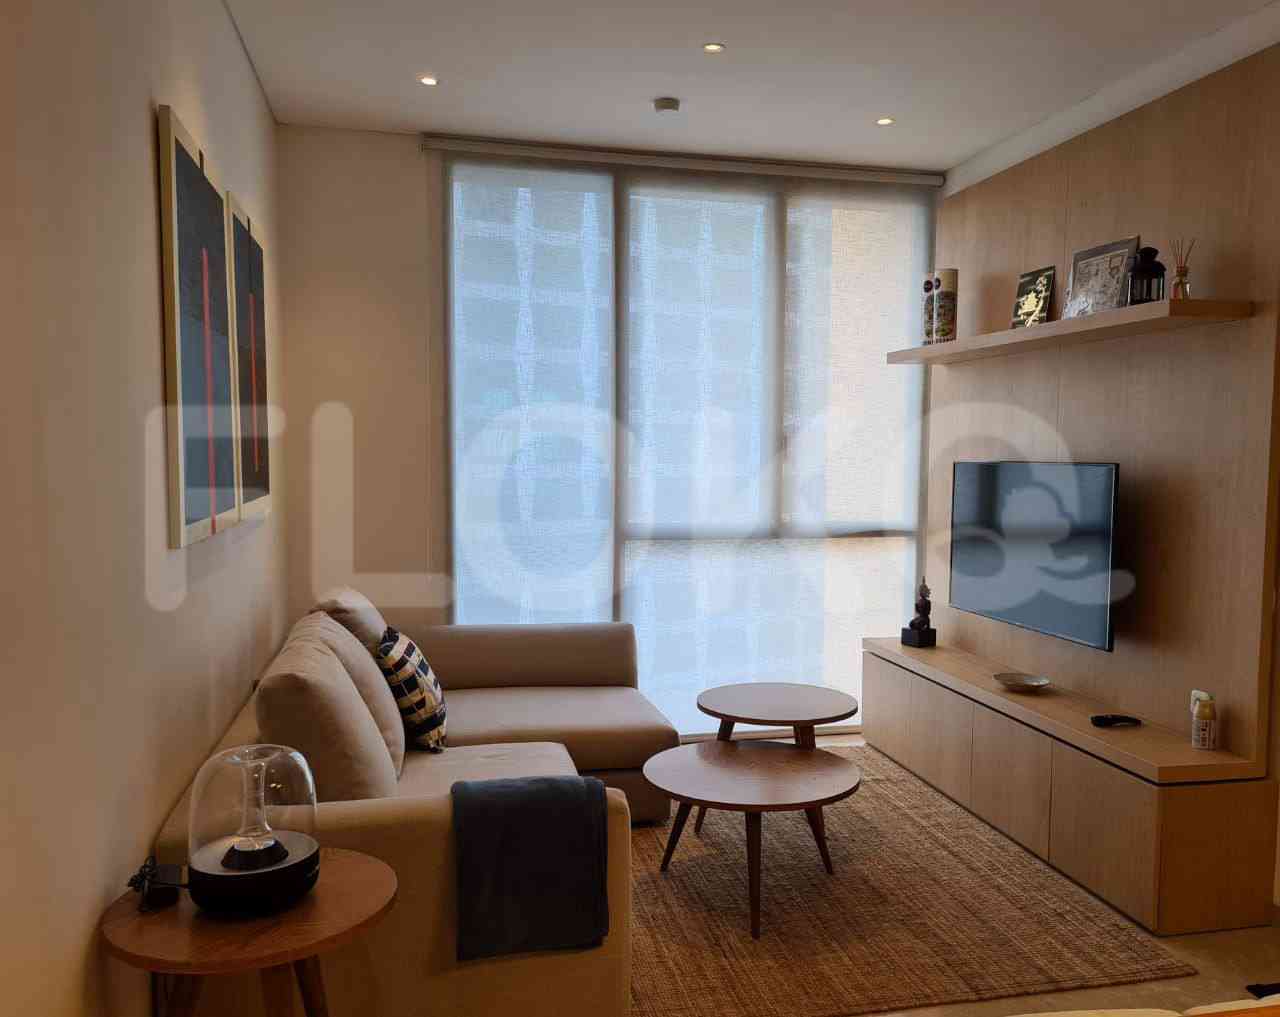 2 Bedroom on 15th Floor for Rent in Izzara Apartment - ftb033 1